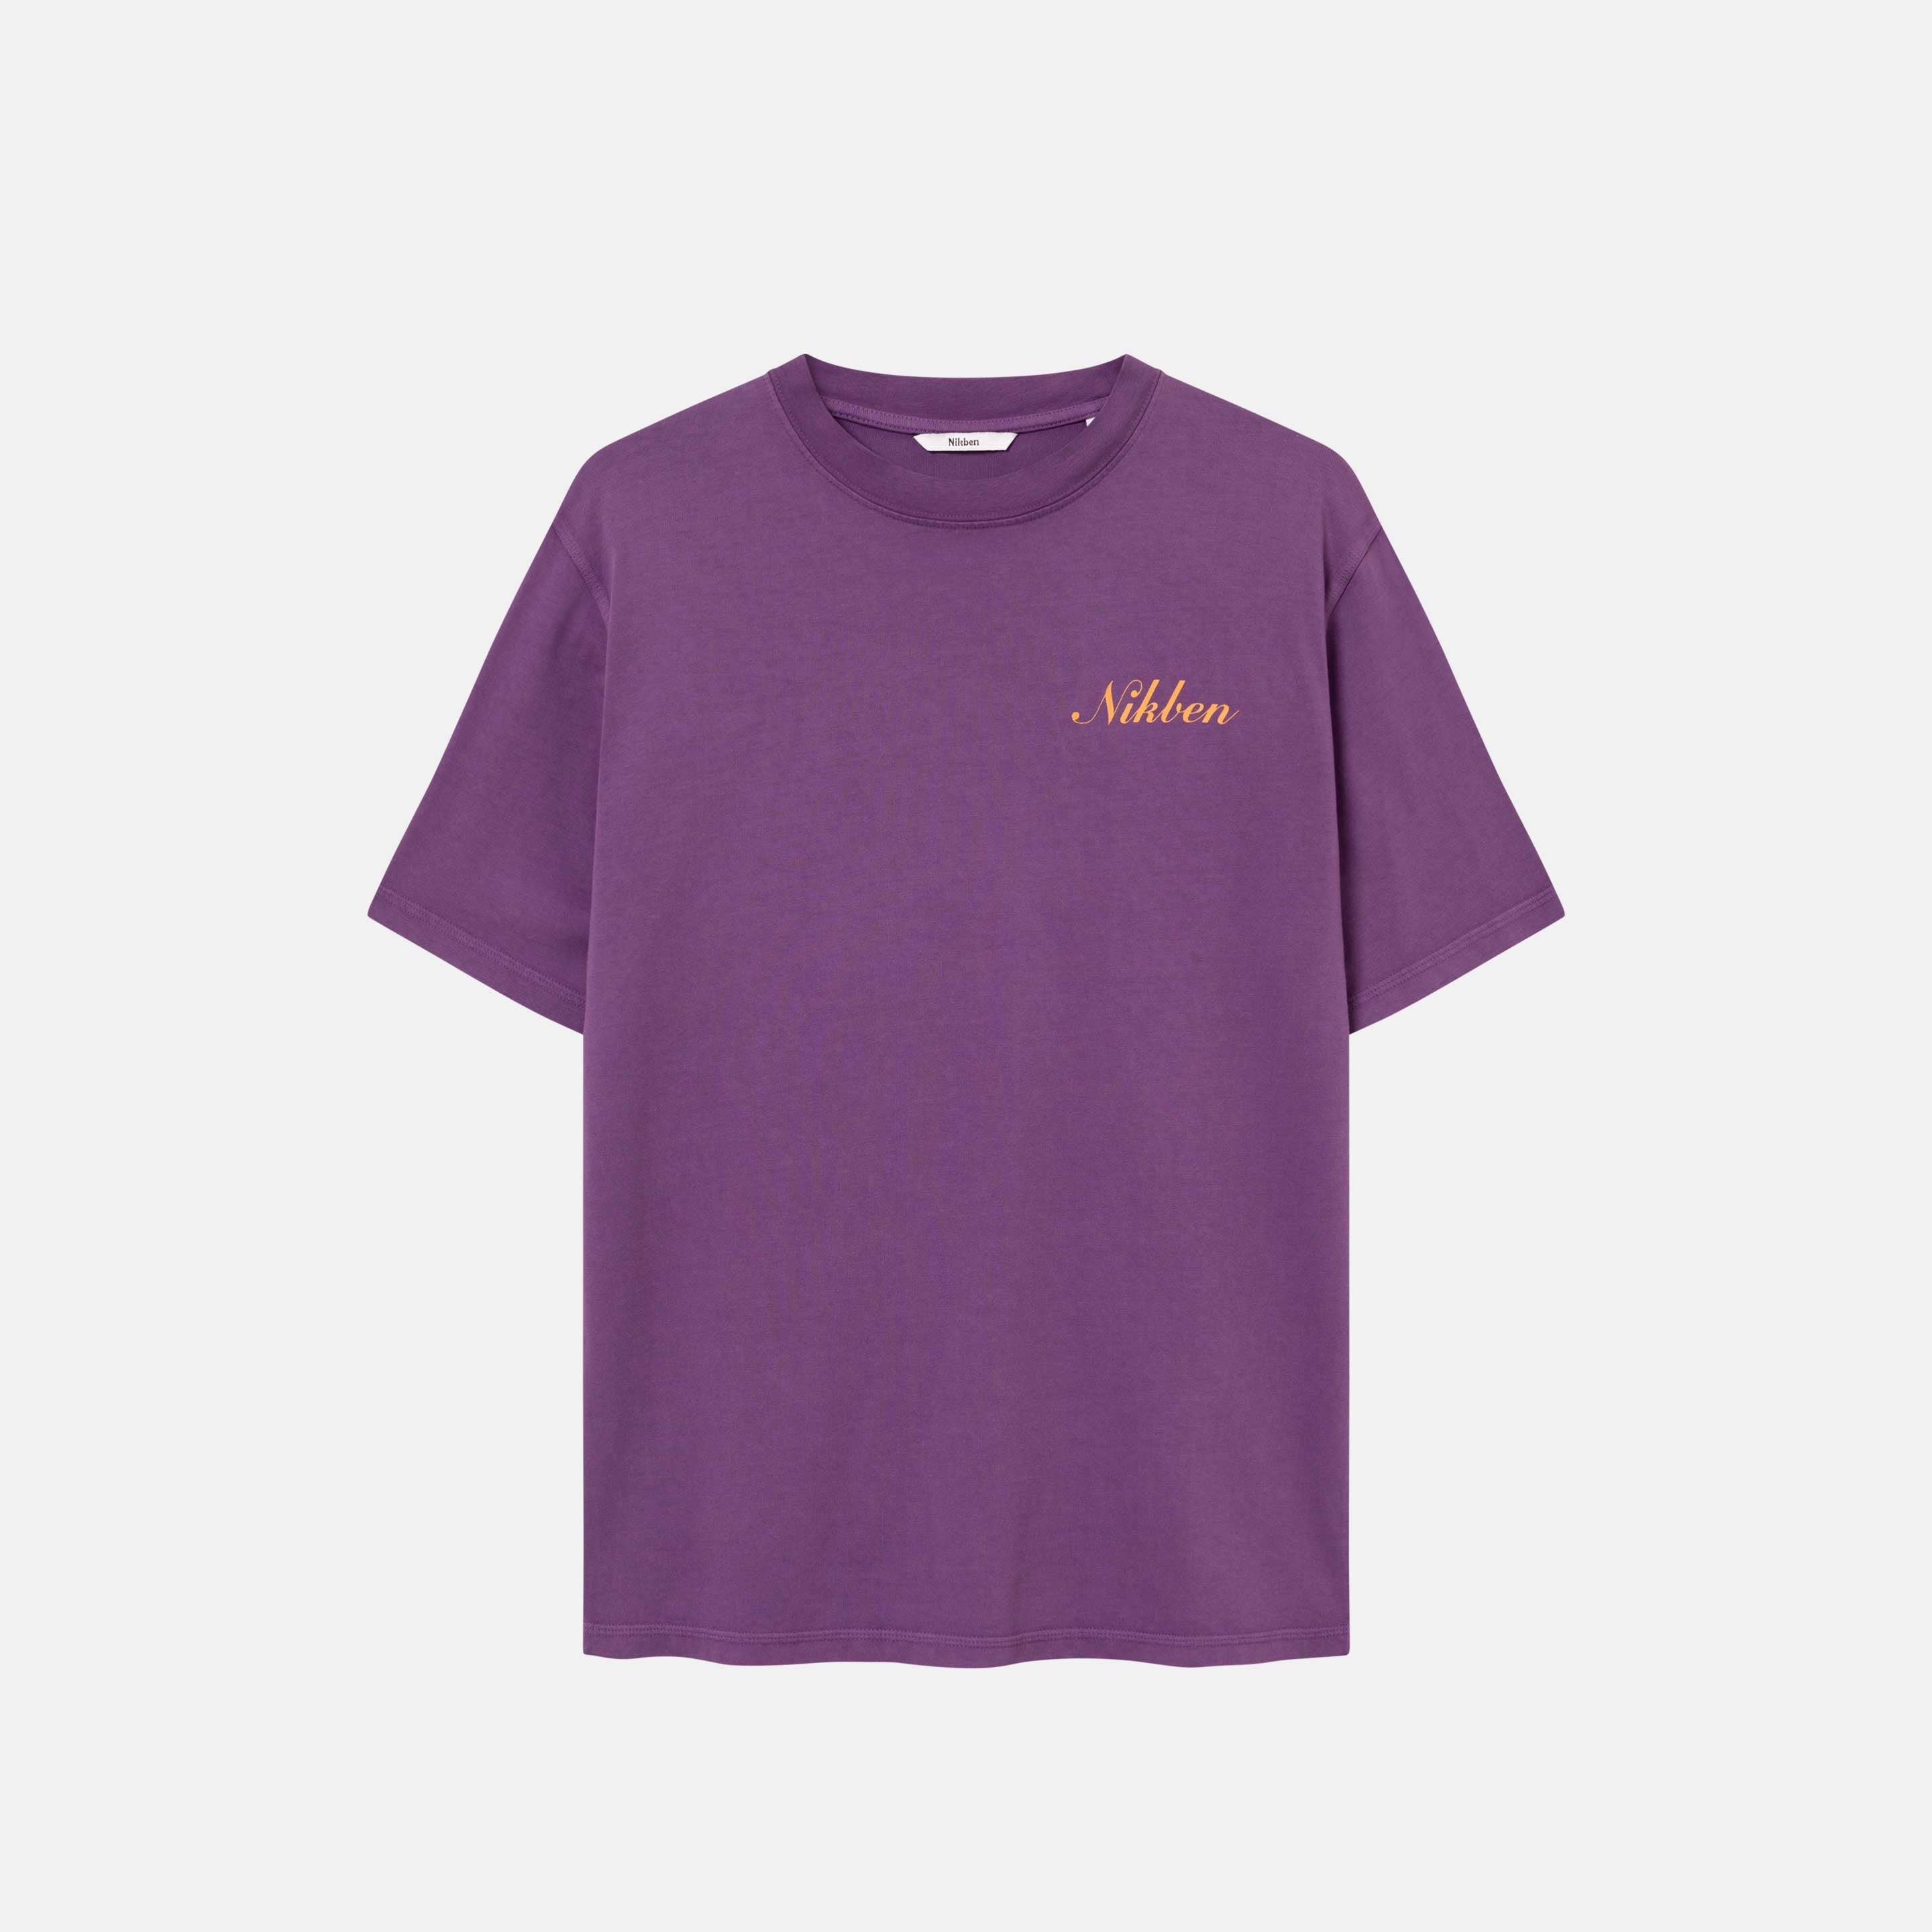 A purple t-shirt with an orange Nikben script logo on its chest